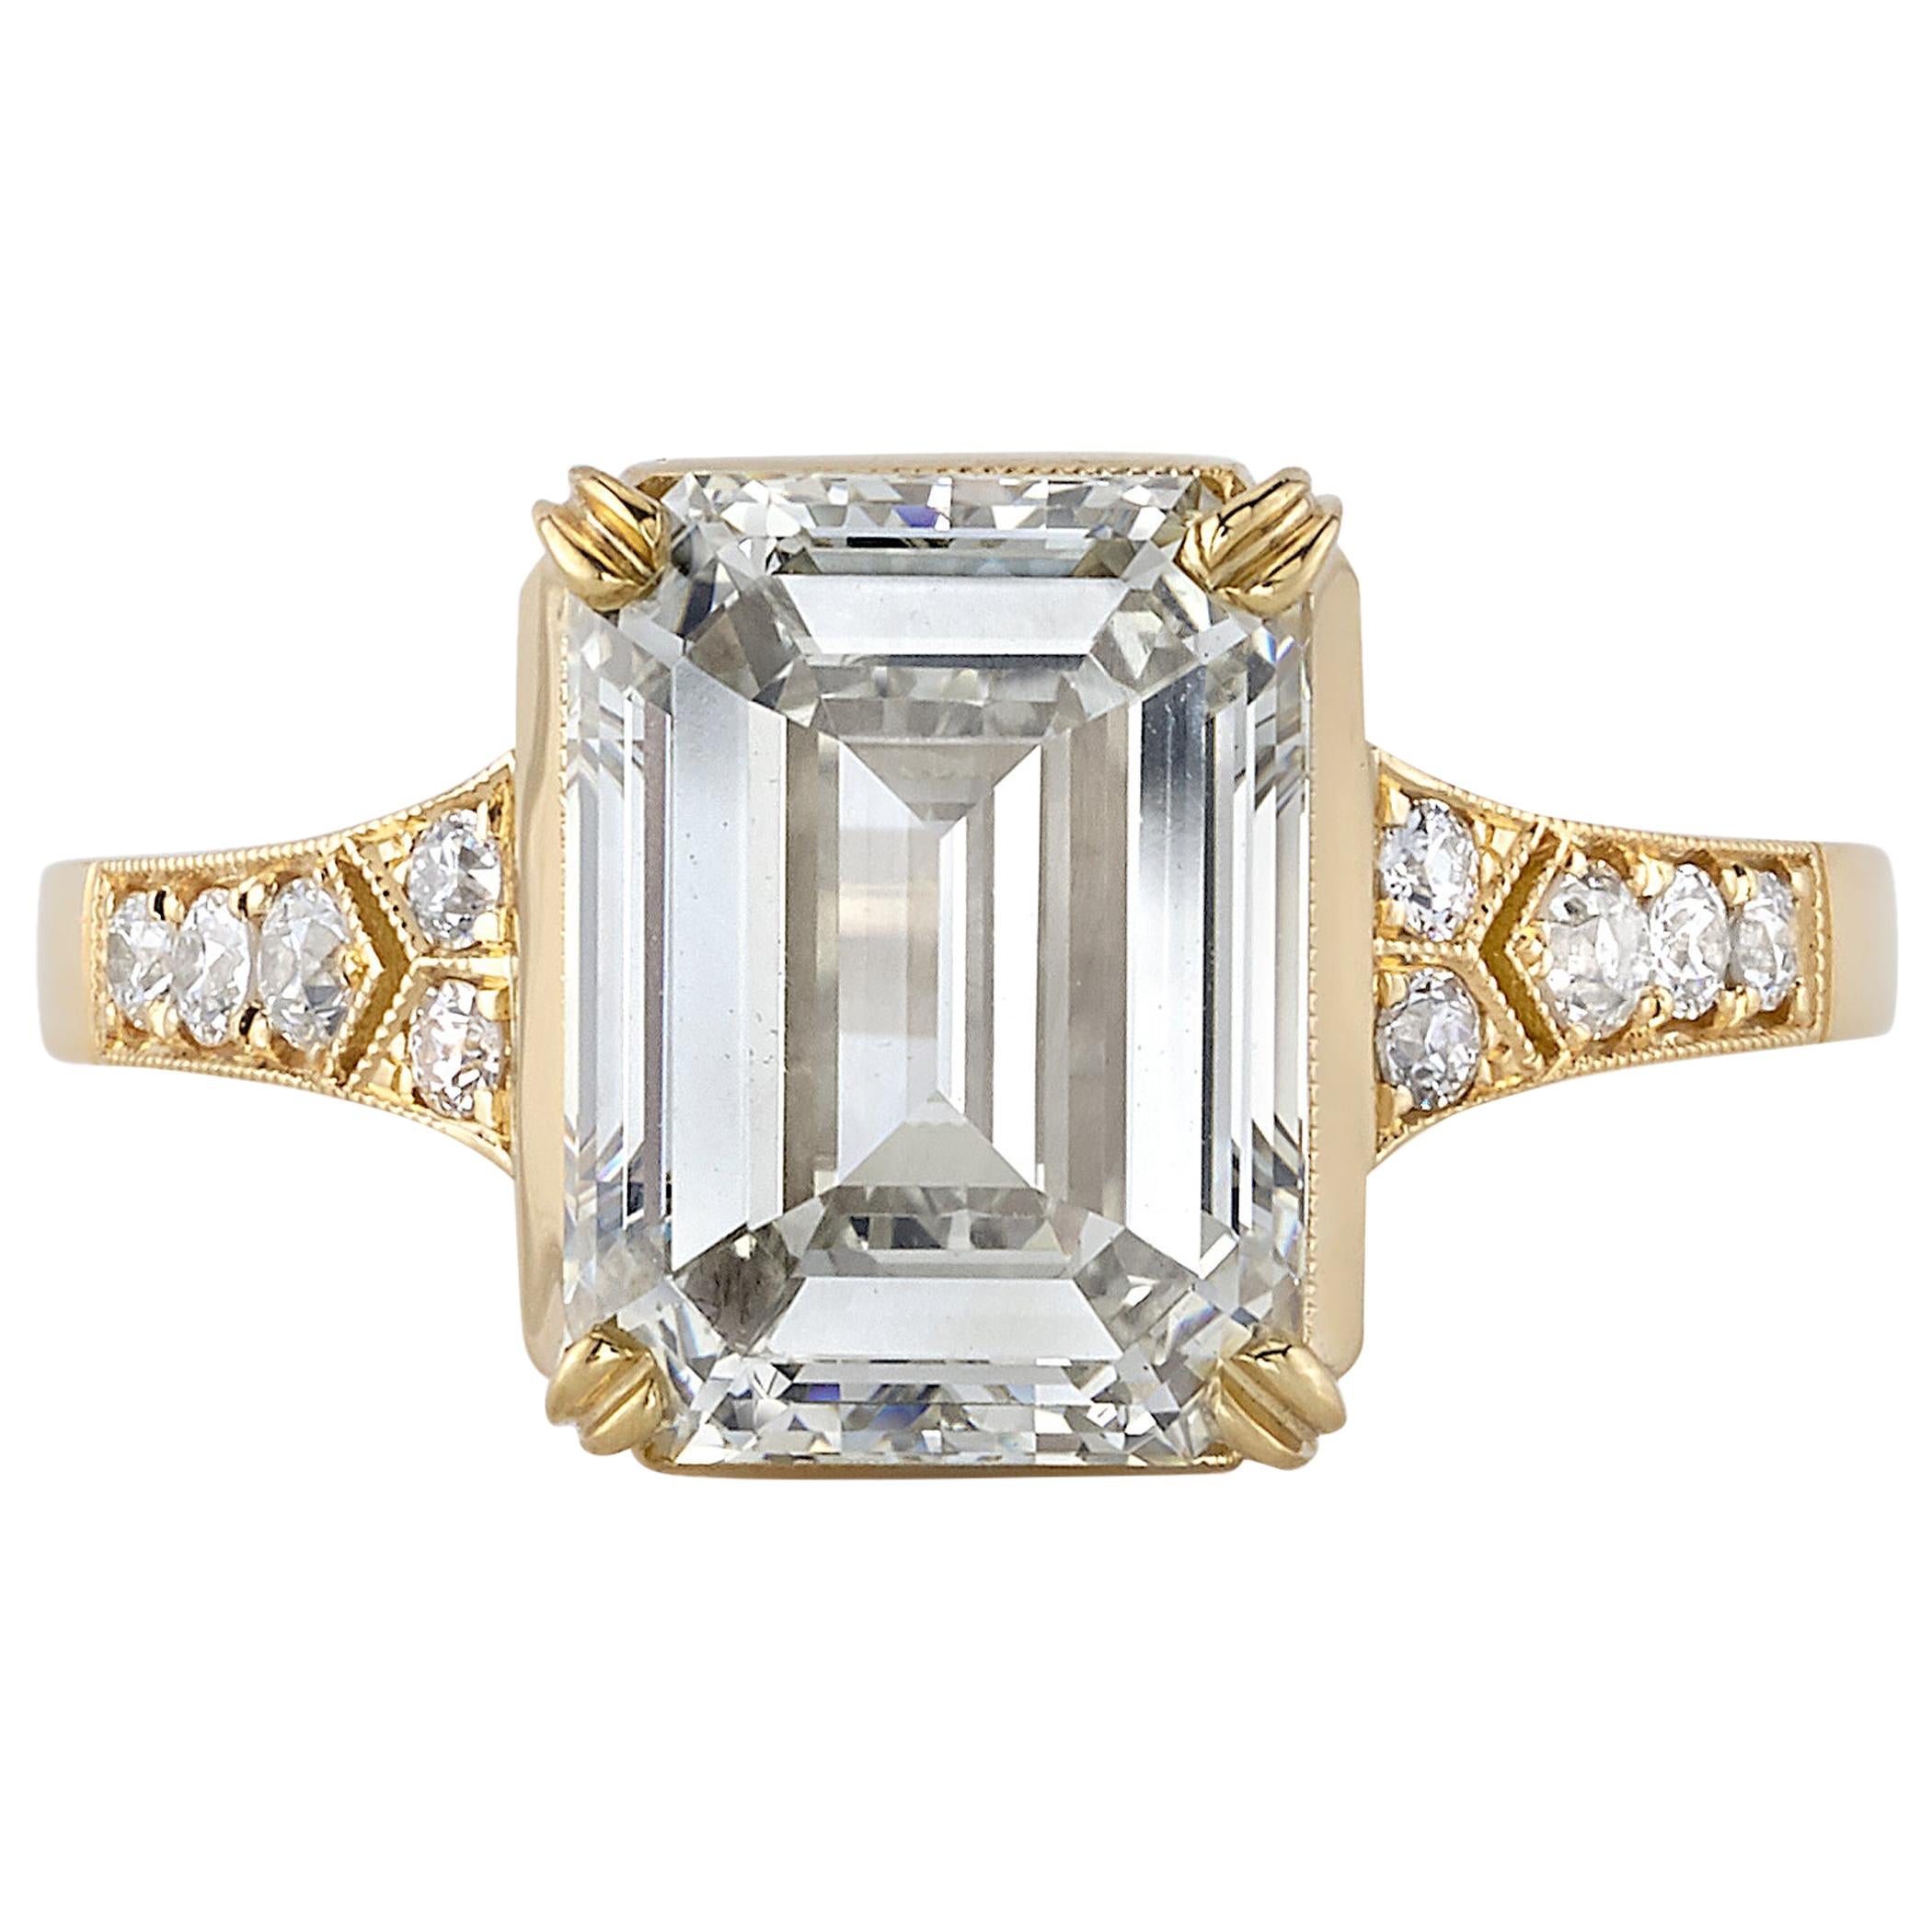 4.02 Carat GIA Certified Emerald Cut Diamond Set in an 18 Karat Yellow Gold Ring